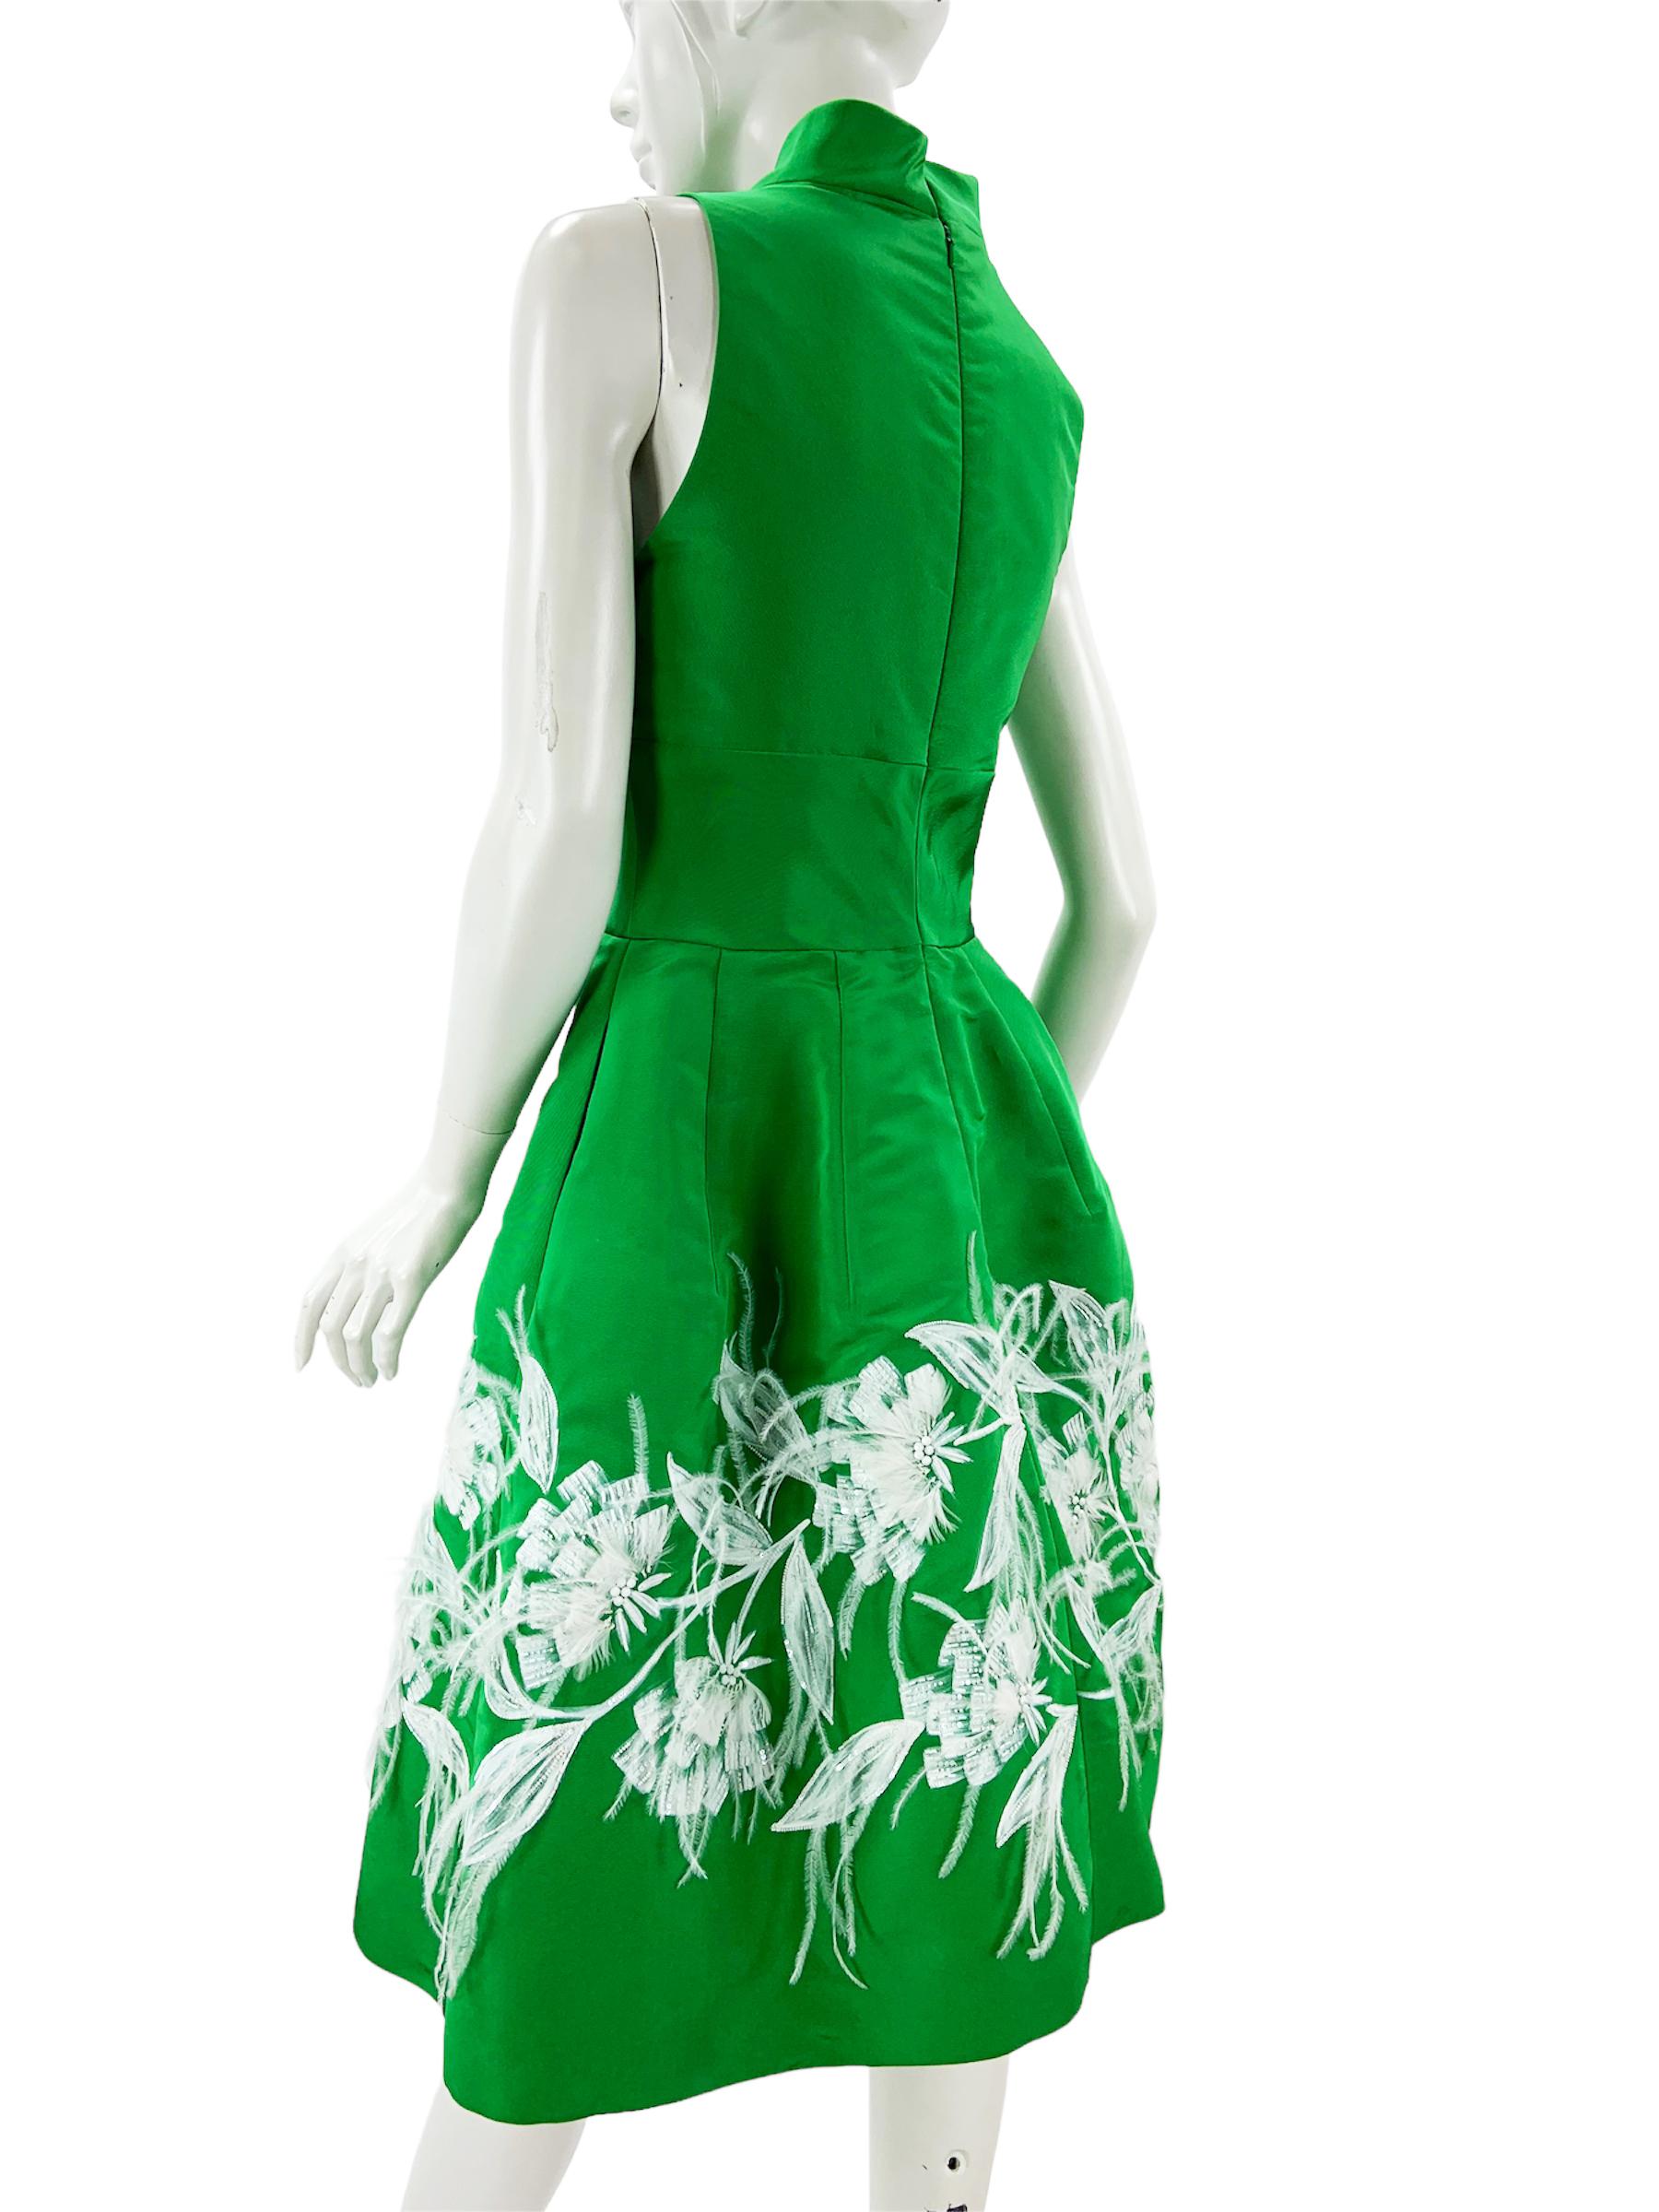 Women's NWT Oscar de la Renta $5490 S/S 2015 Green Silk Taffeta Feather Beads Dress US 6 For Sale